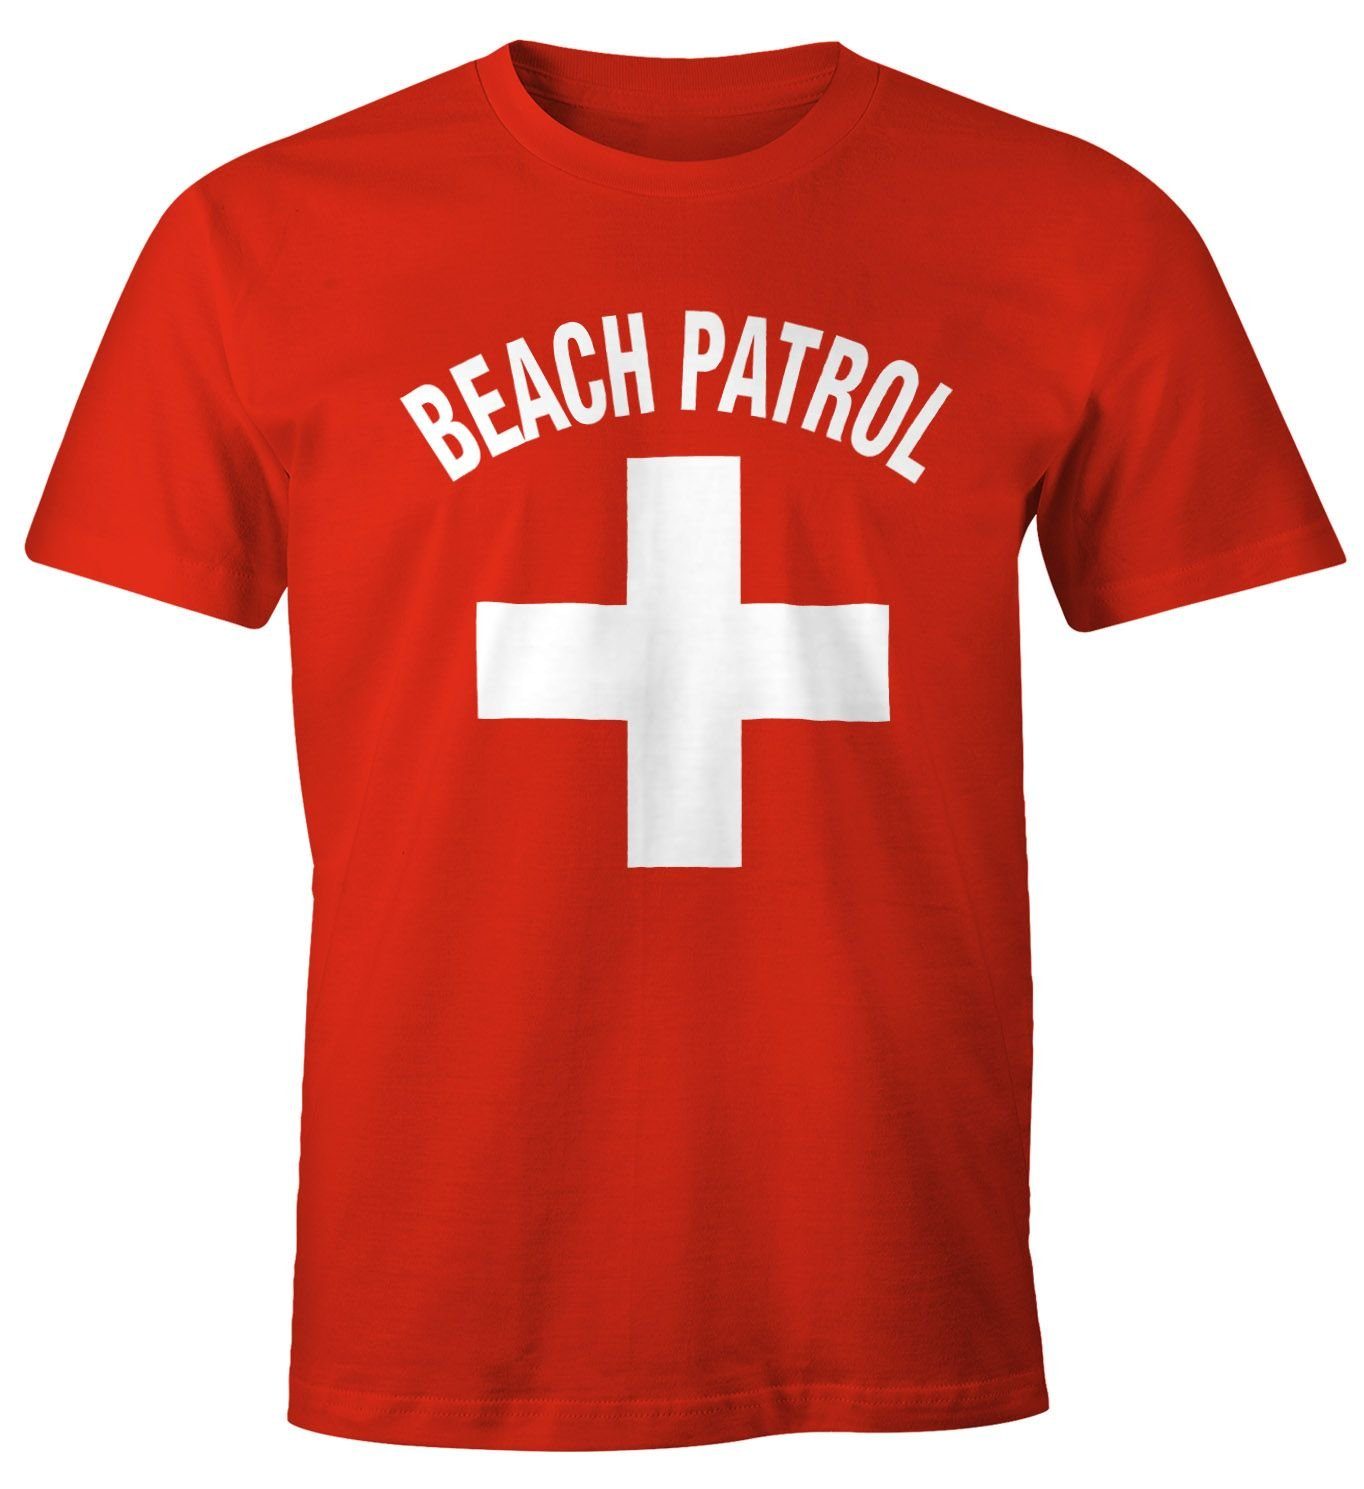 MoonWorks Print-Shirt Herren T-Shirt Beach Patrol Fun-Shirt Moonworks® mit Print